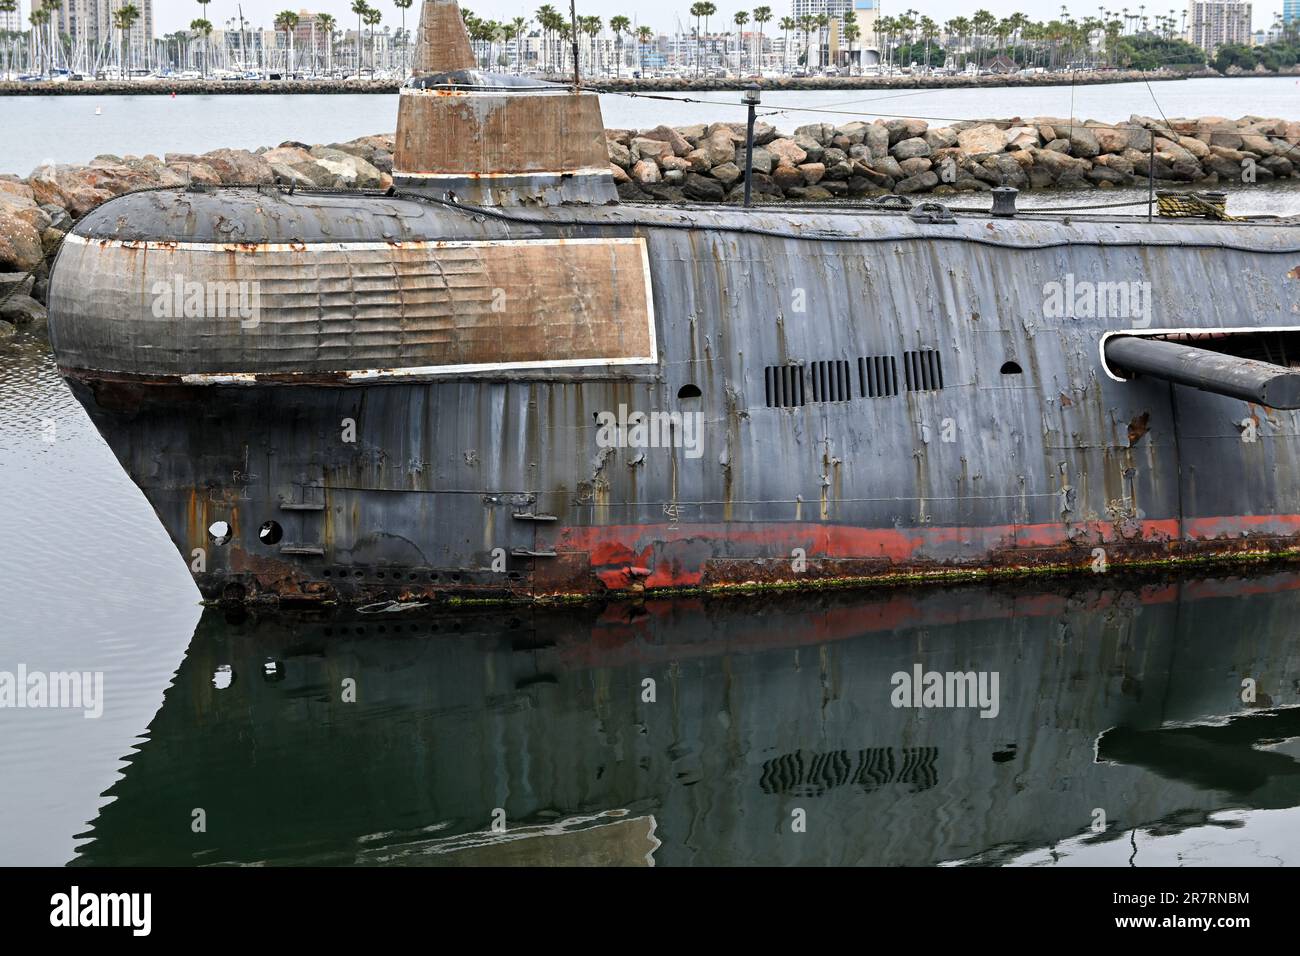 LONG BEACH, CALIFORNIA - 14 JUN 2023: The Scorpion a Soviet Era Foxtrot Class Submarine at the Queen Mary Hotel. Stock Photo